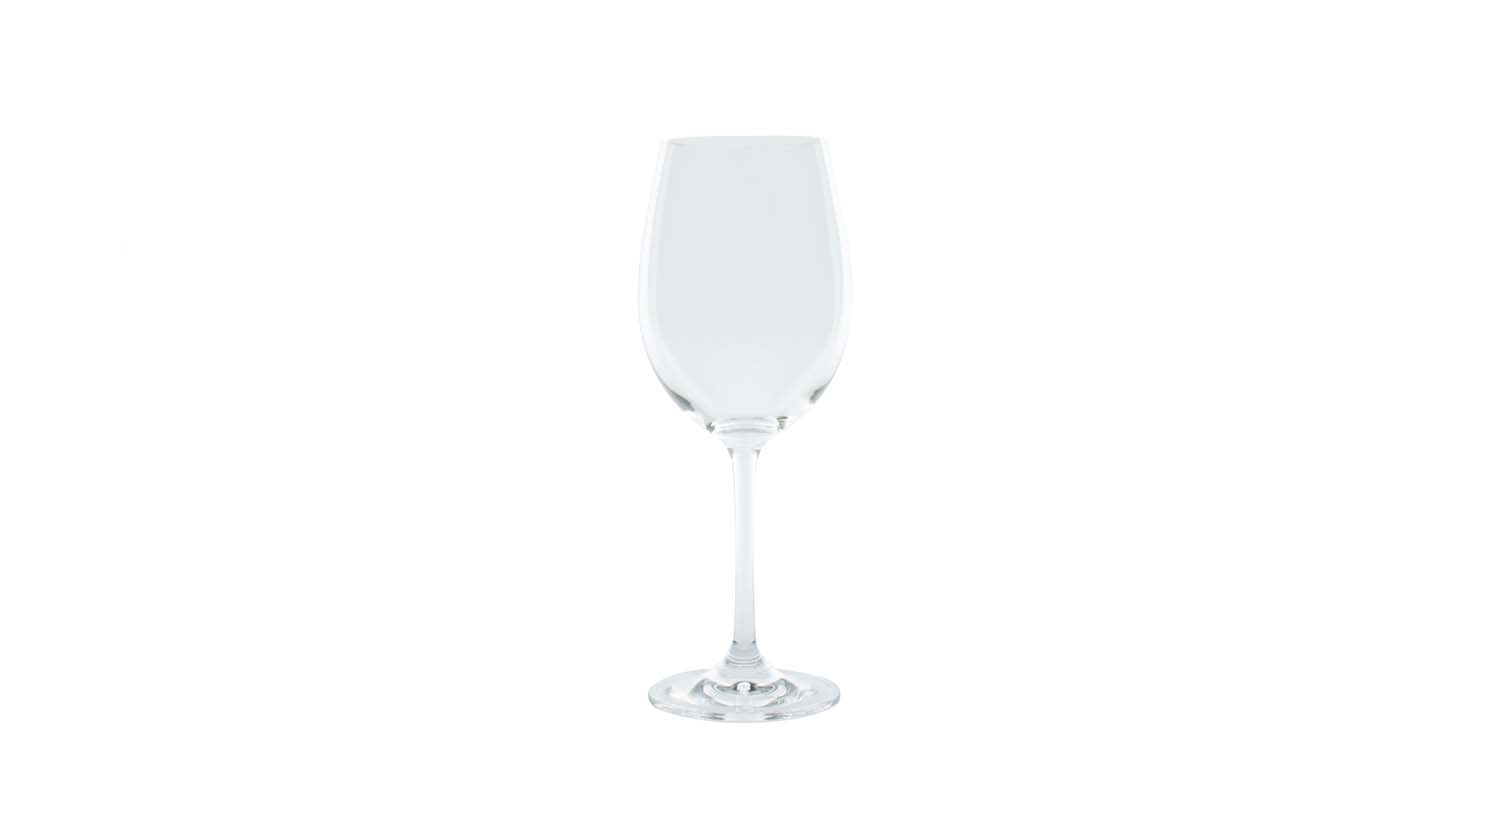 crisp white wine glass